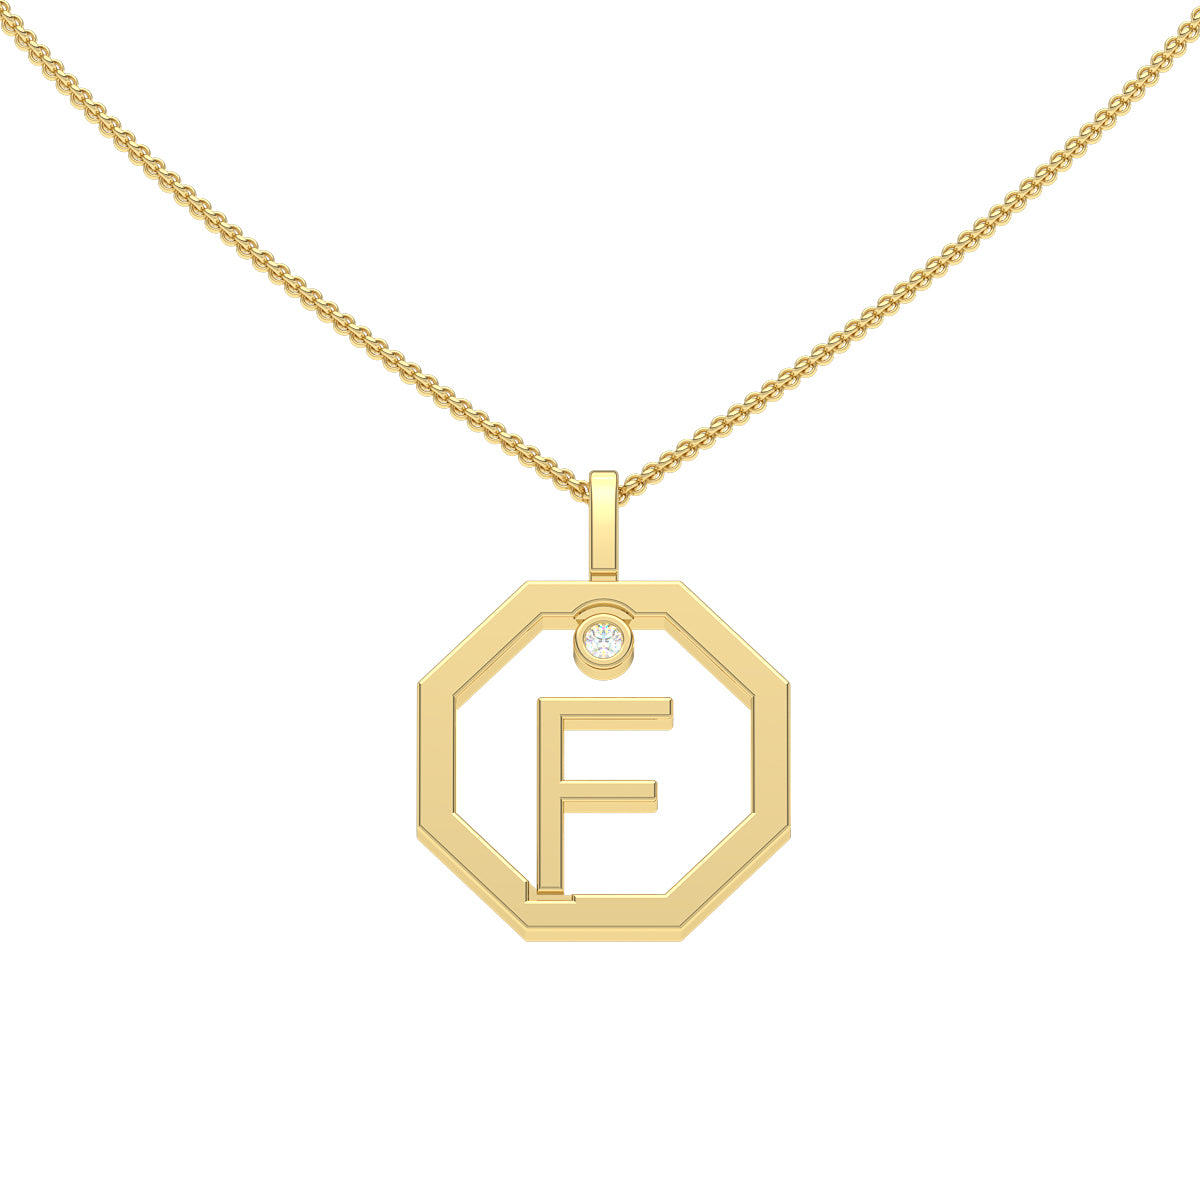 Personalised-Initial-F-diamond-yellow-gold-pendant-Lizunova-Fine-Jewels-Sydney-NSW-Australia